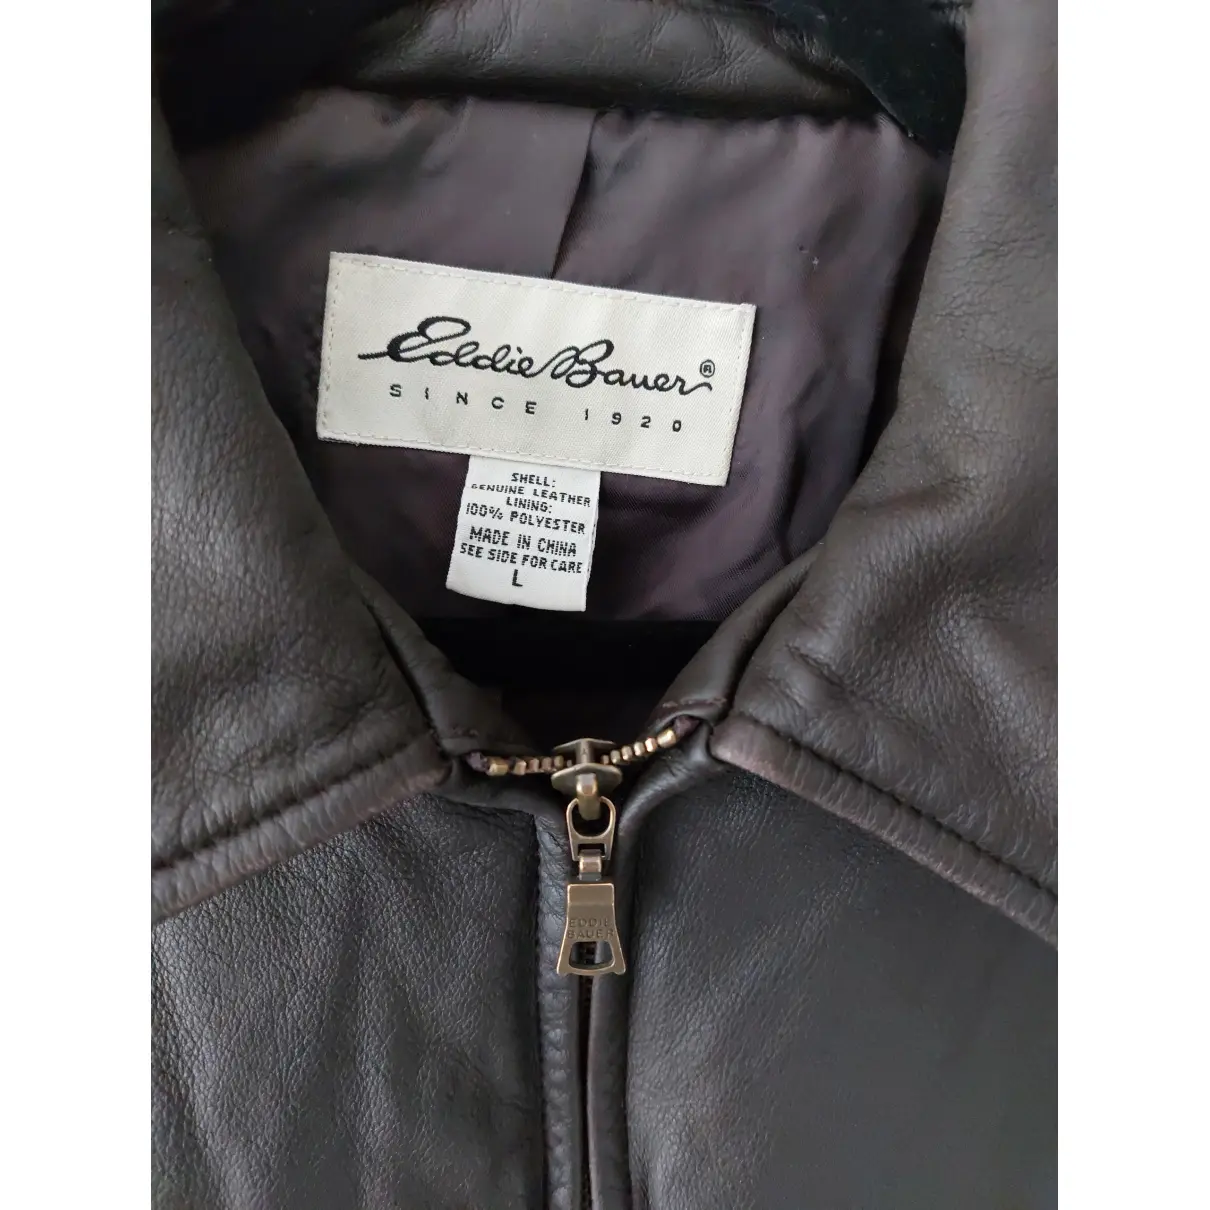 Buy Eddie Bauer Leather jacket online